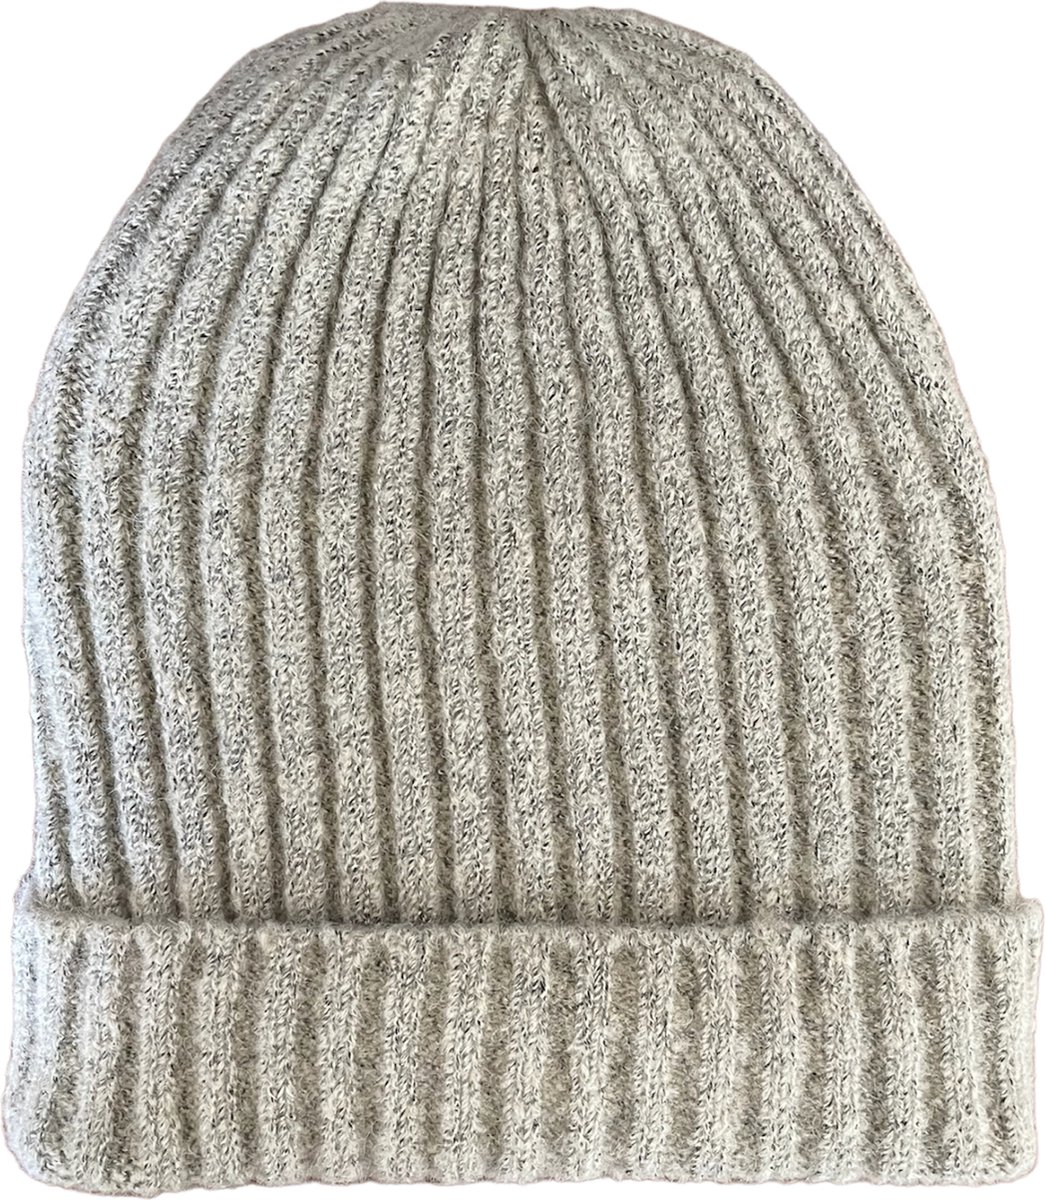 ASTRADAVI Beanie Hats - Muts - Warme Skimutsen Hoofddeksels - Trendy Winter Mutsen - Kaki